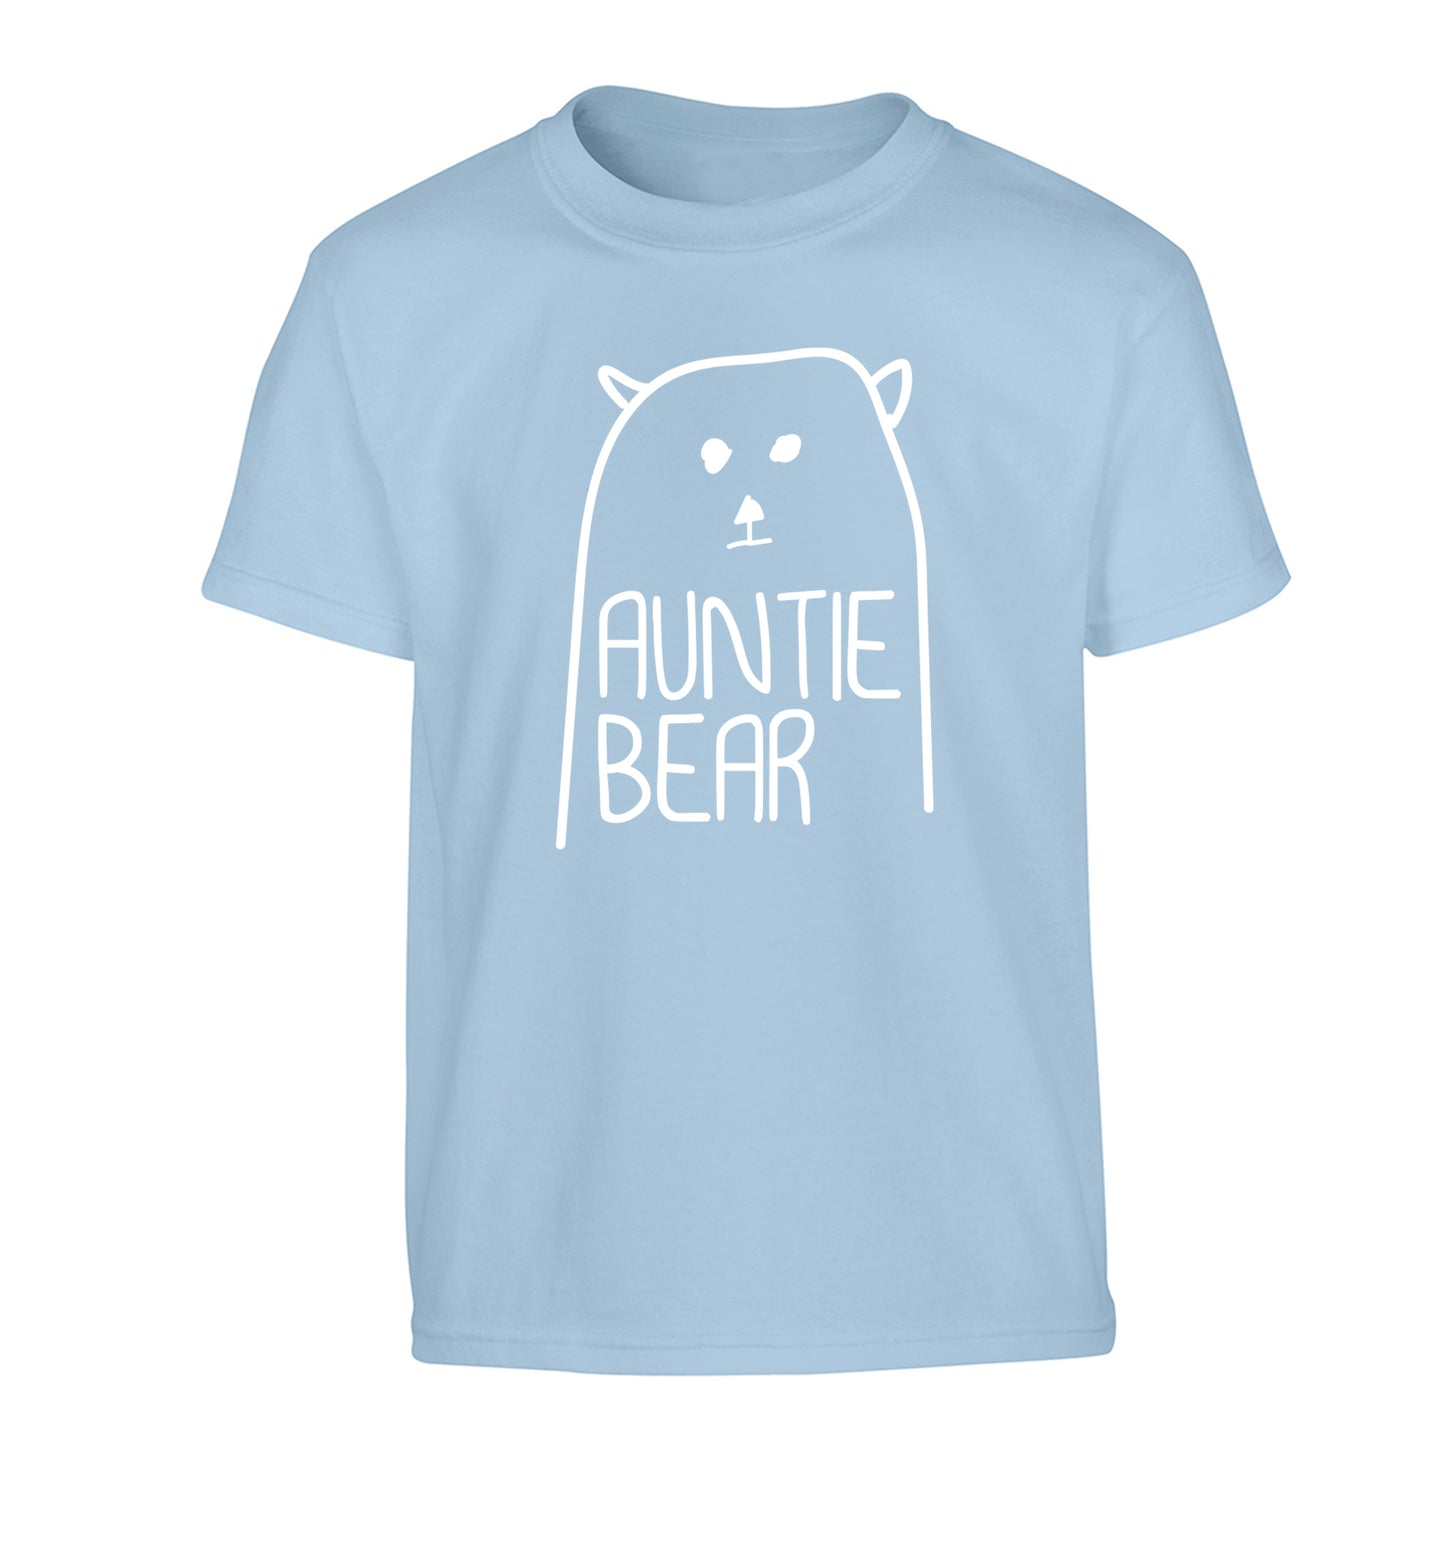 Auntie bear Children's light blue Tshirt 12-13 Years